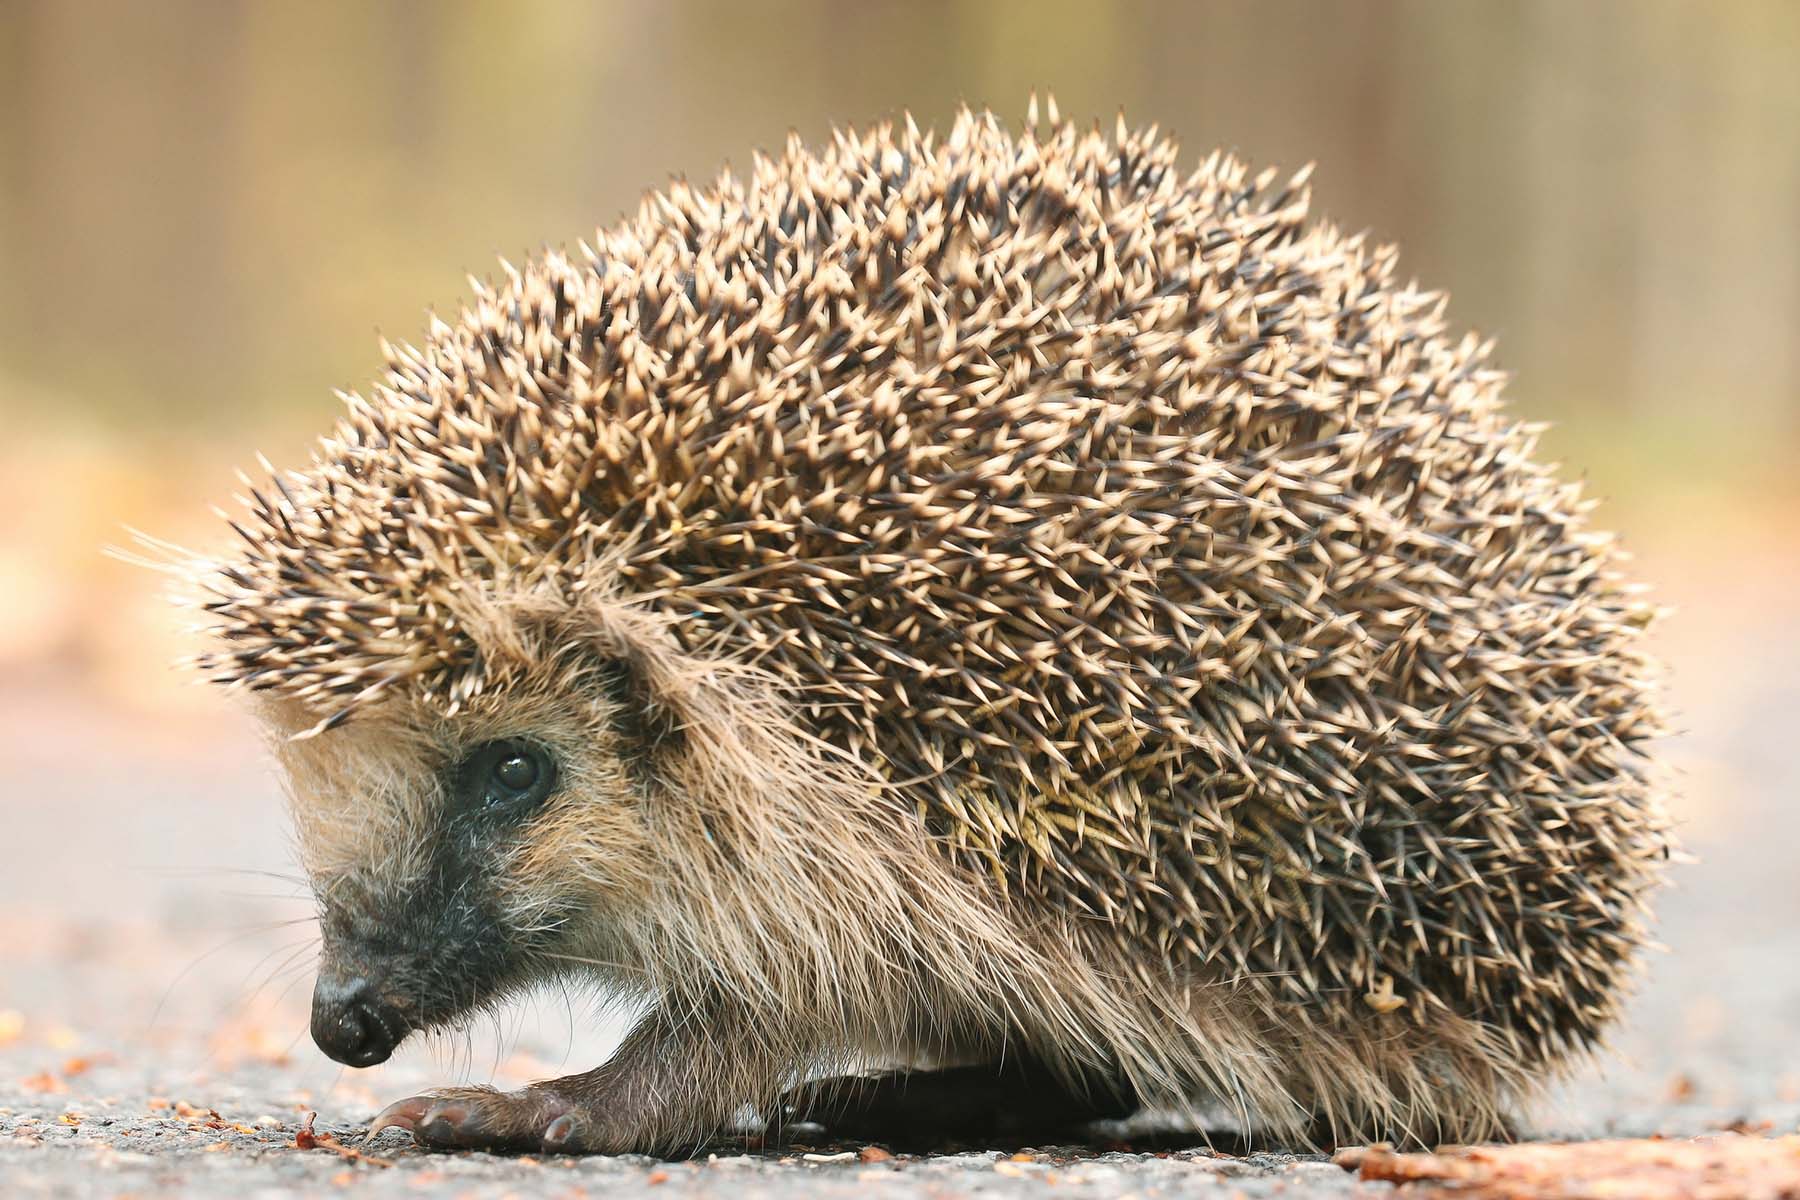 What part of speech is hedgehog?